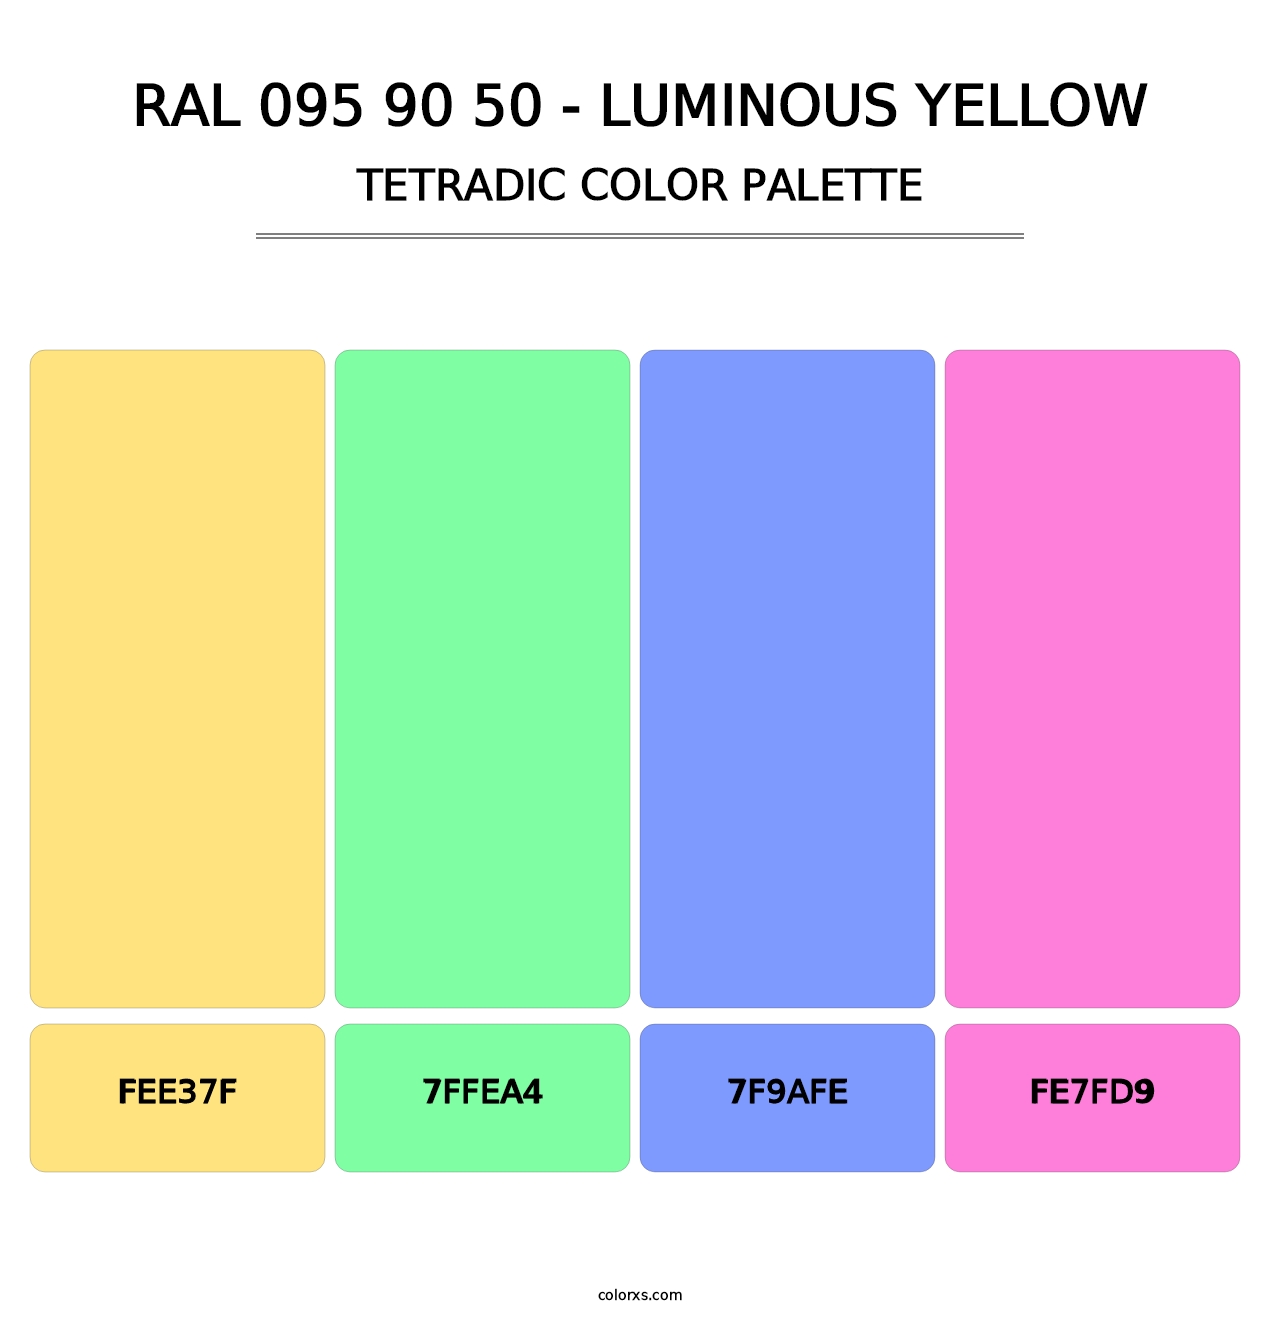 RAL 095 90 50 - Luminous Yellow - Tetradic Color Palette